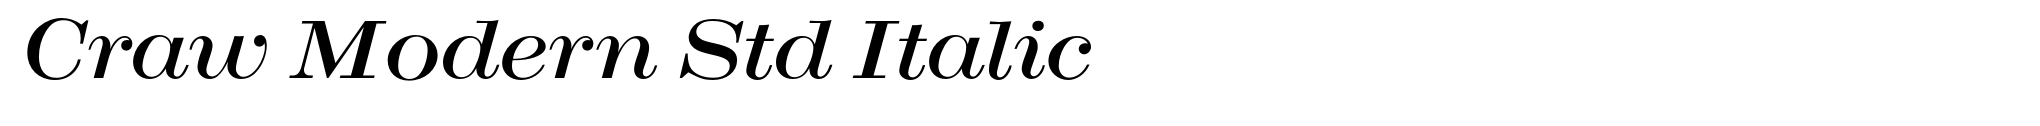 Craw Modern Std Italic image